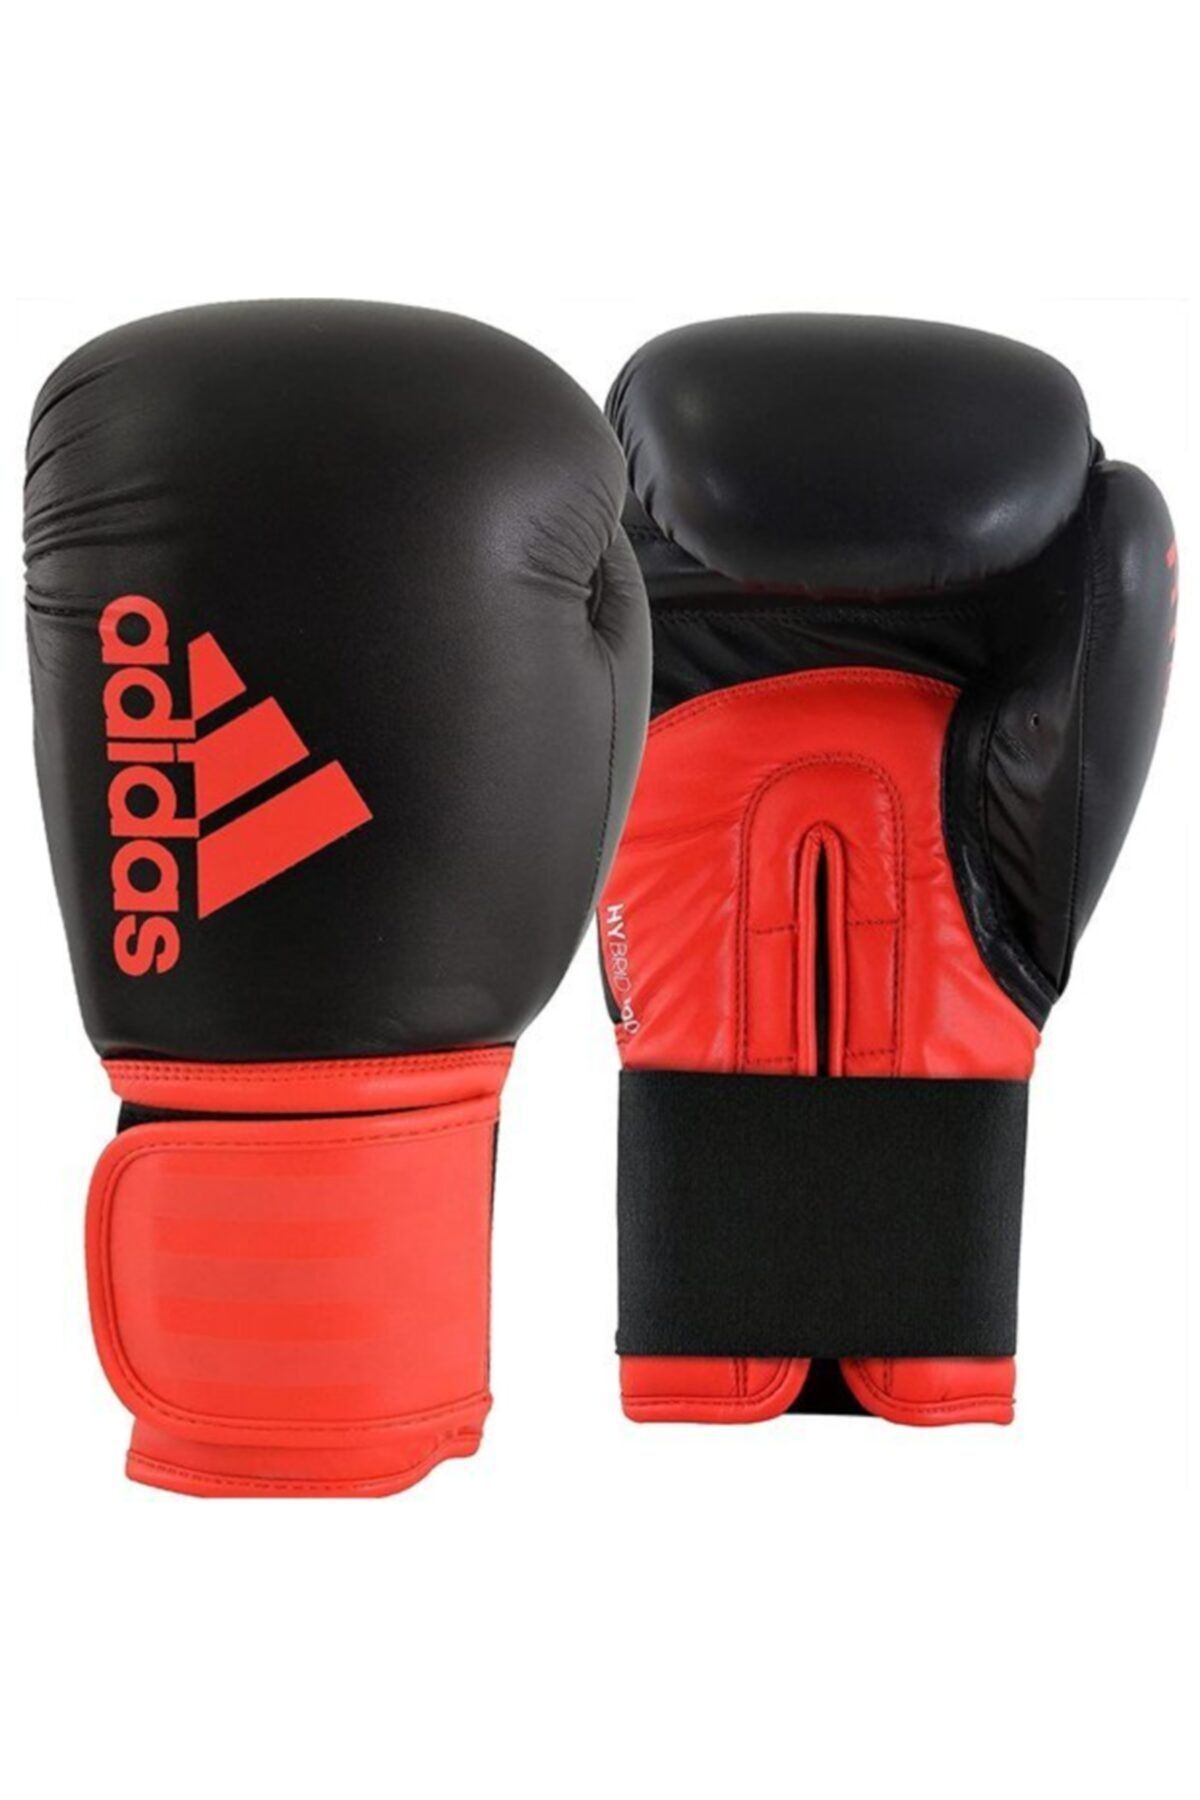 adidas Adıh100 Hybrid100 Boks Eldiveni Boxing Gloves